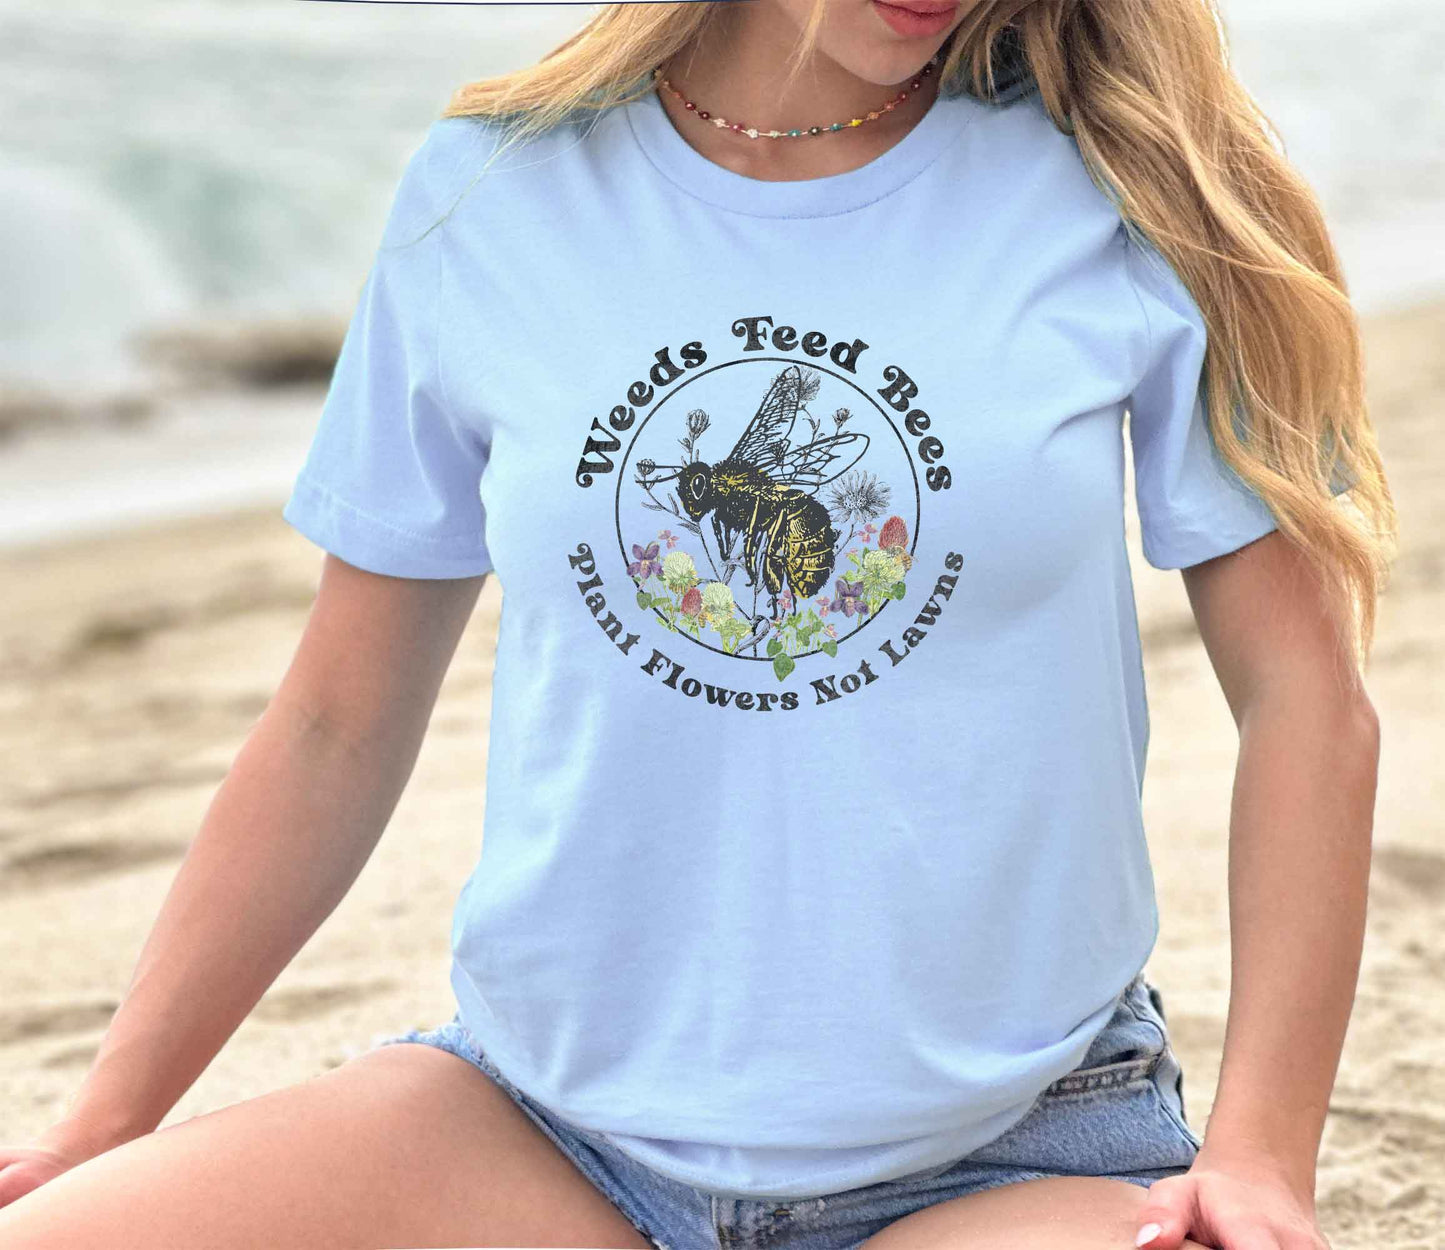 Save Native Bees T-Shirt – Fit Naturalist Shop